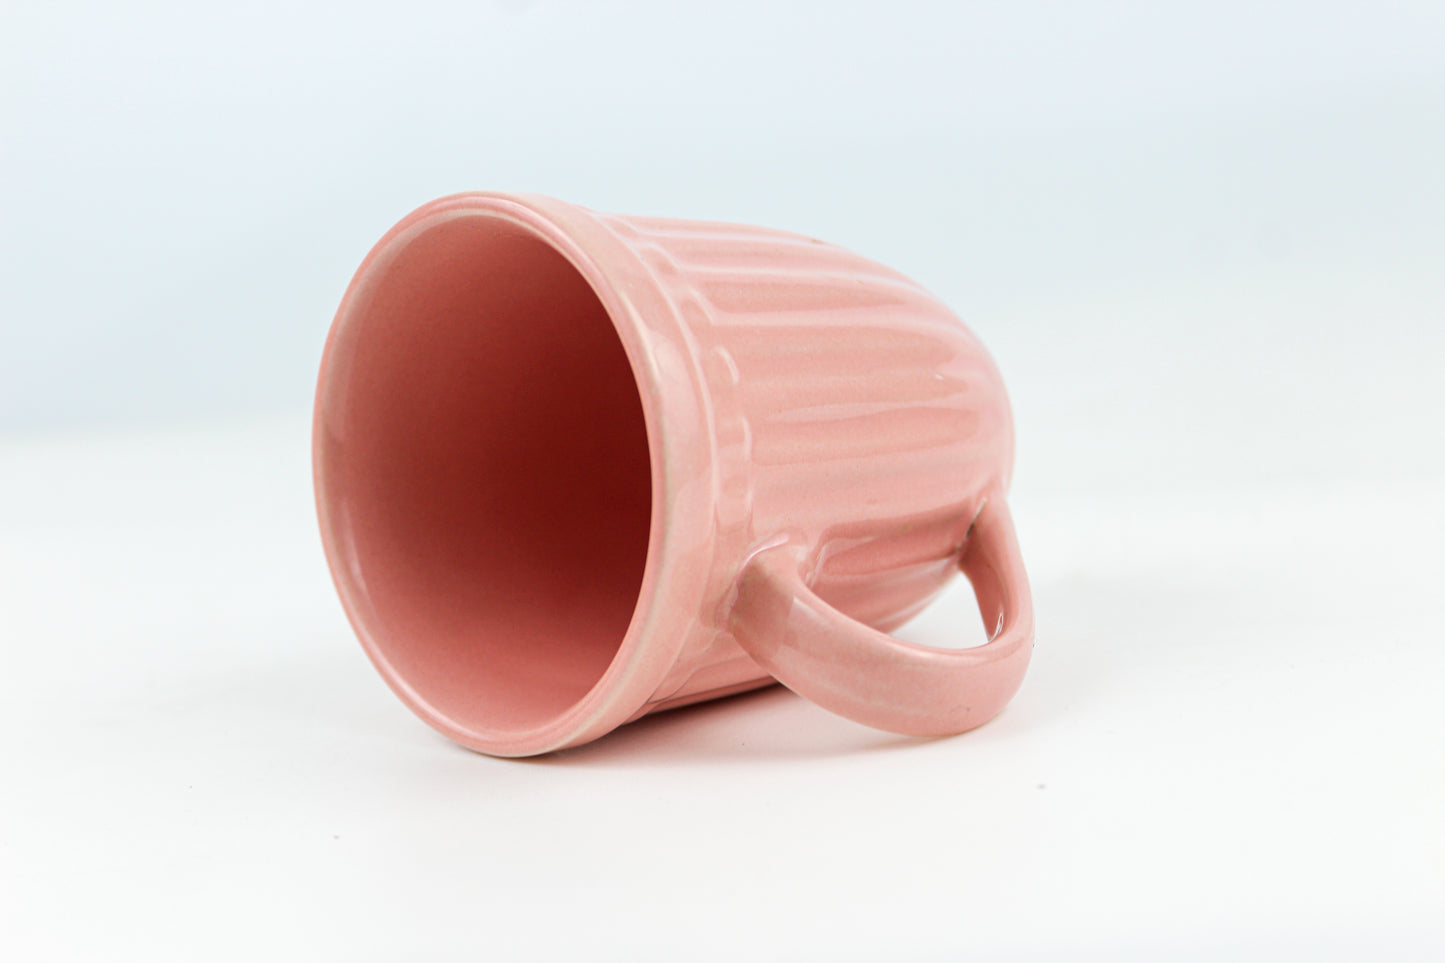 Siesta - Baby Pink Handcrafted Ceramic Coffee Mugs 